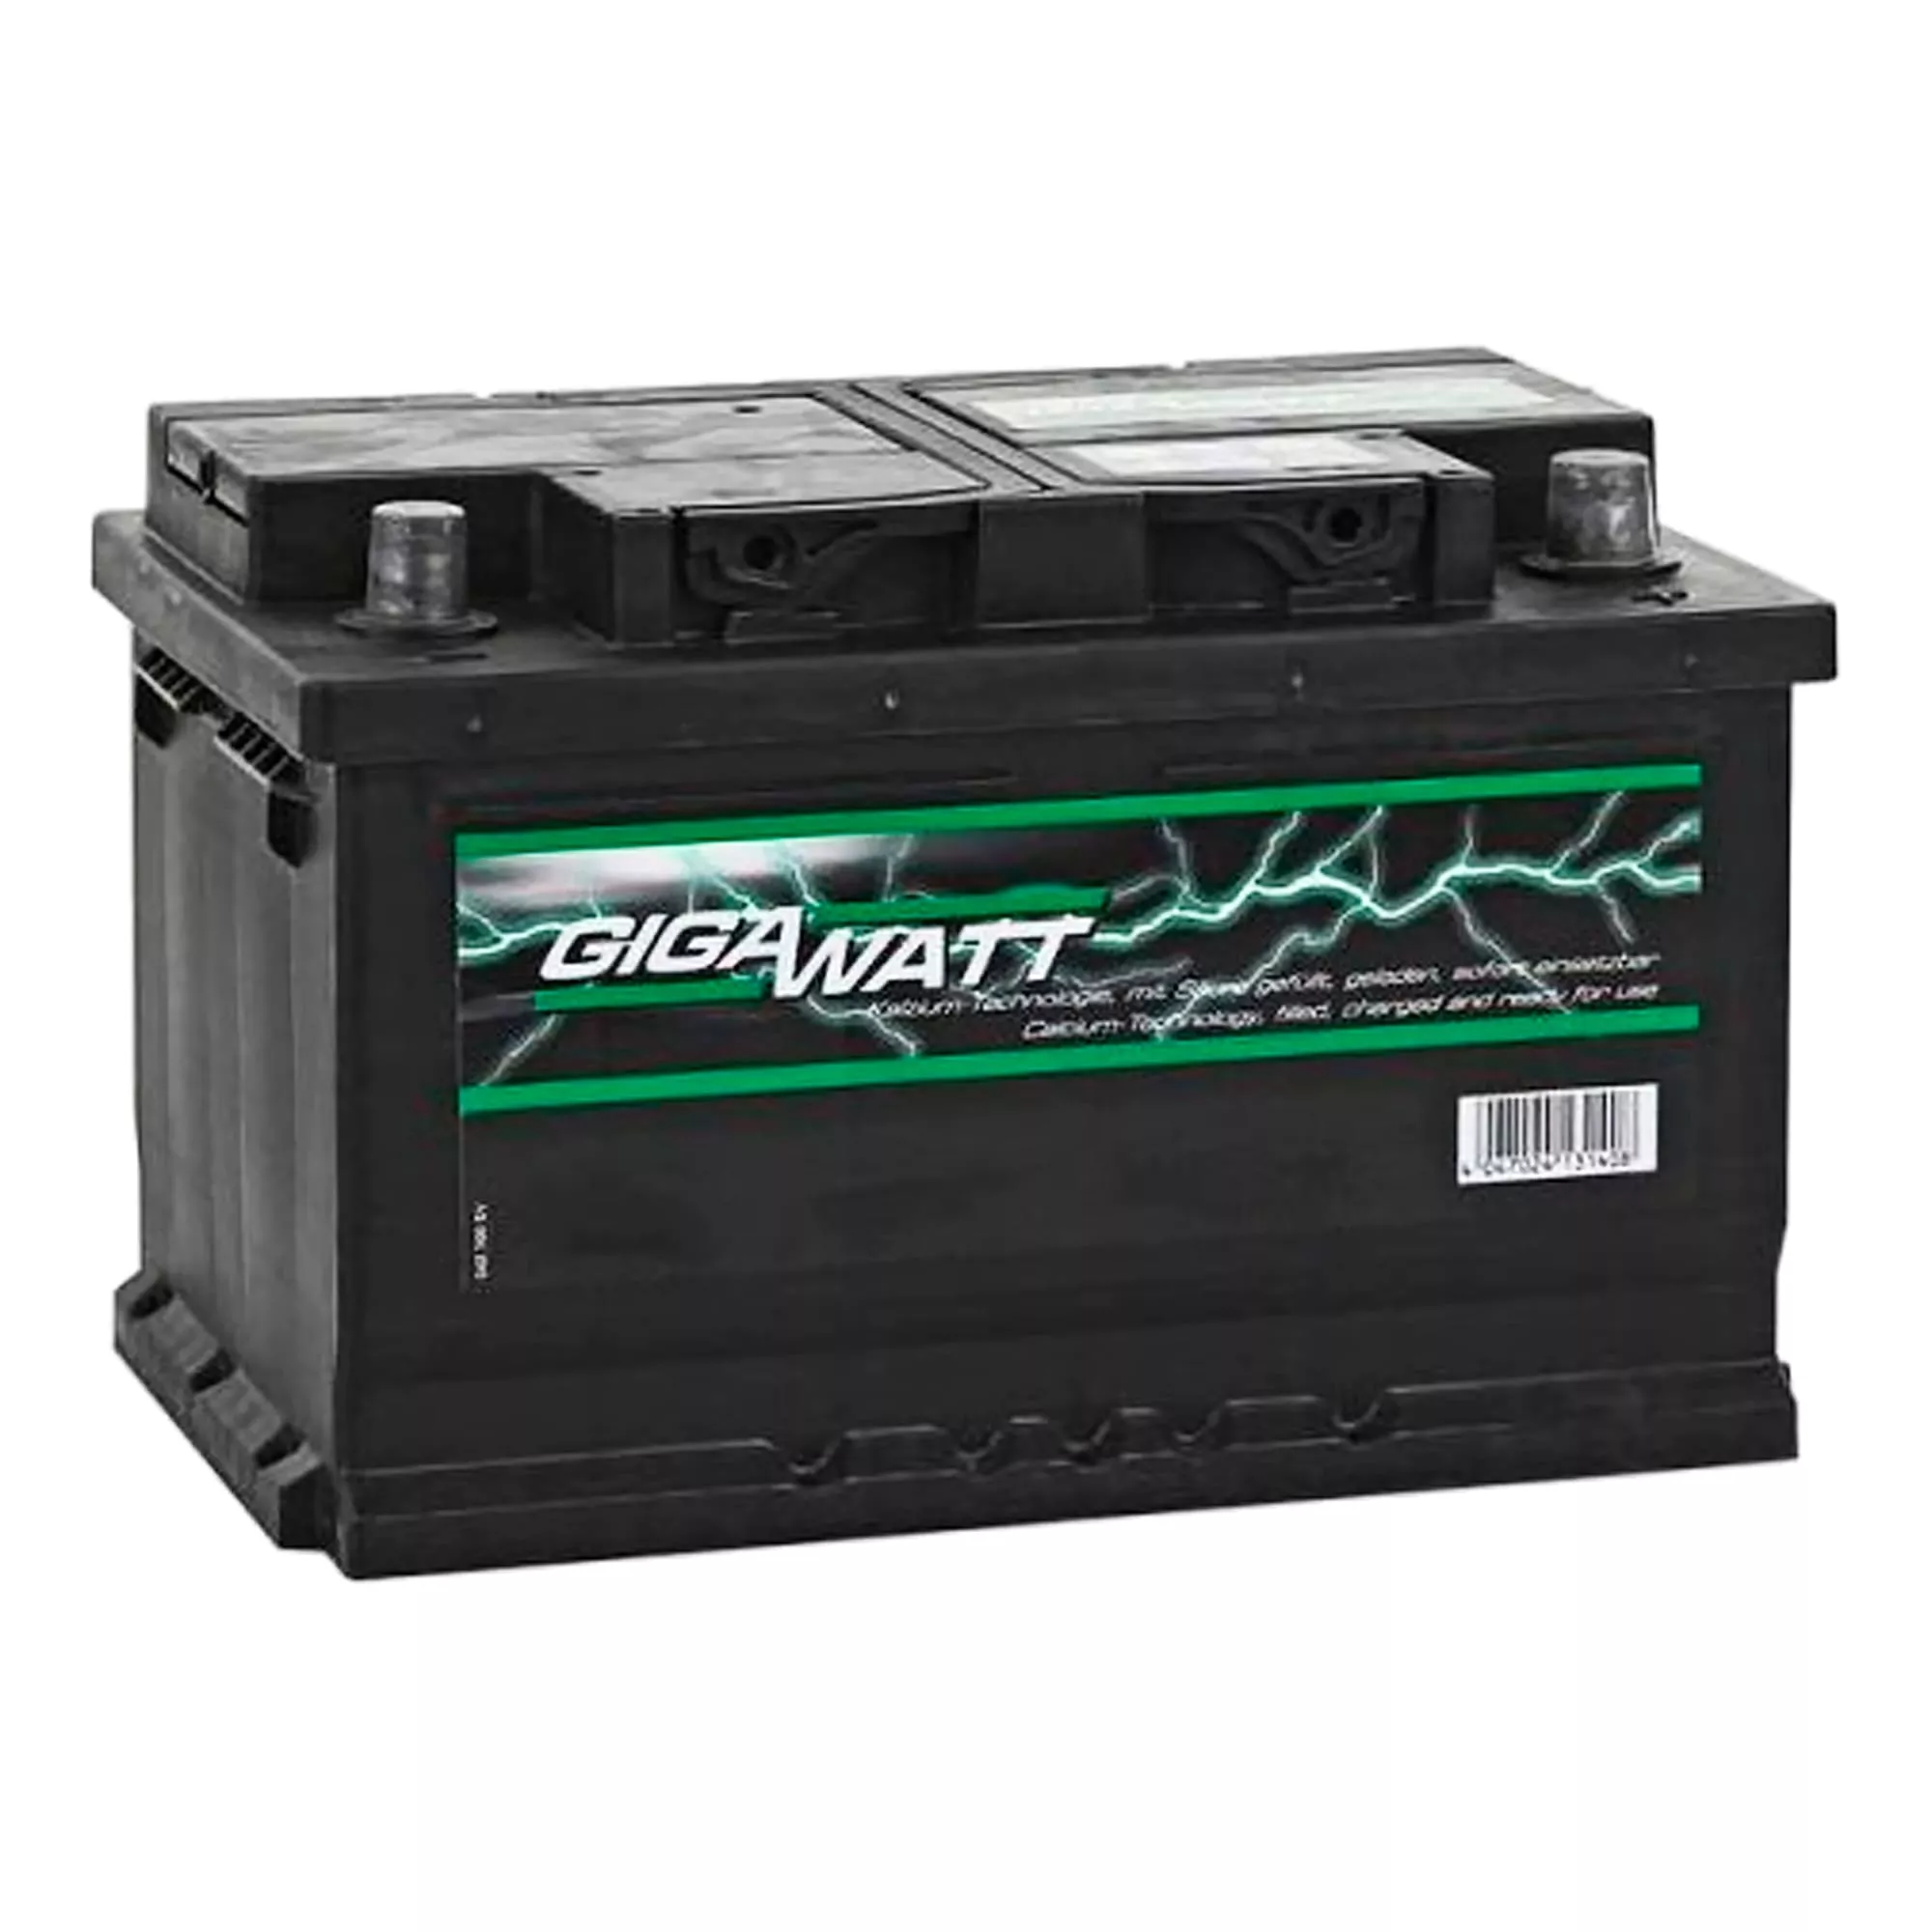 Автомобильный аккумулятор GIGAWATT 6CT-70Ah 640А АзЕ (0185757009)